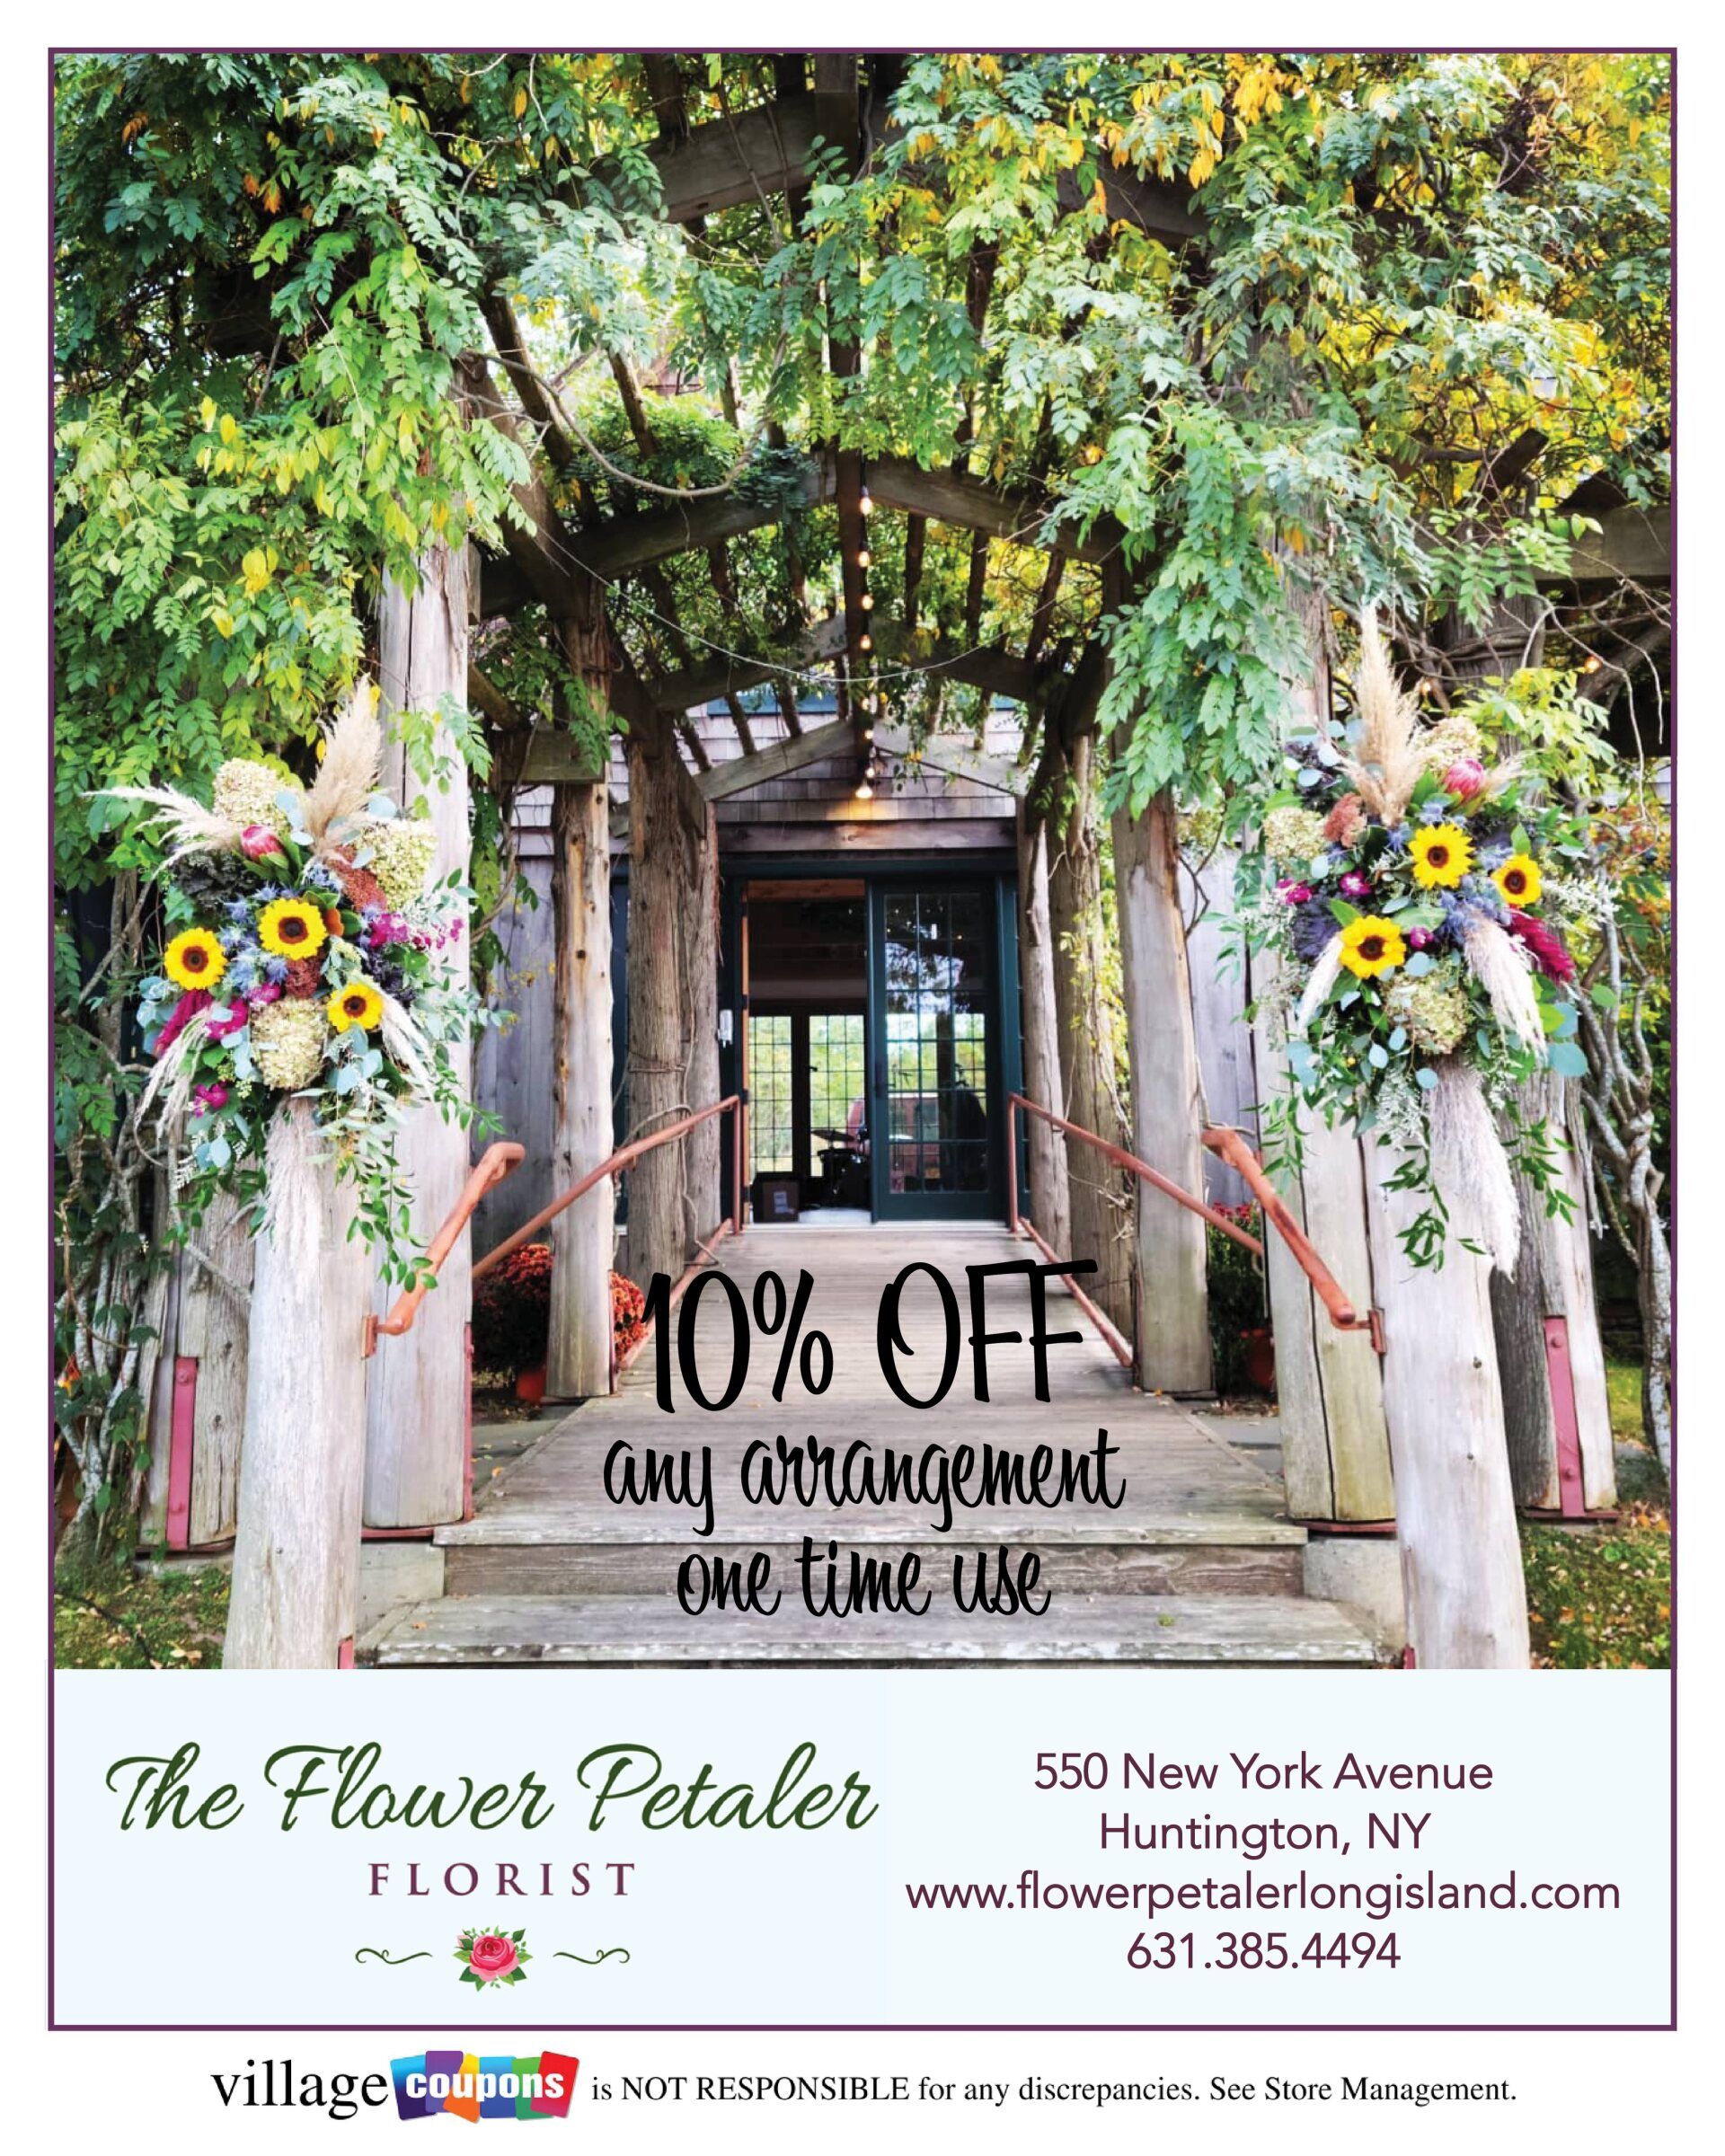 An advertisement for the flower florist offers a 10 % off